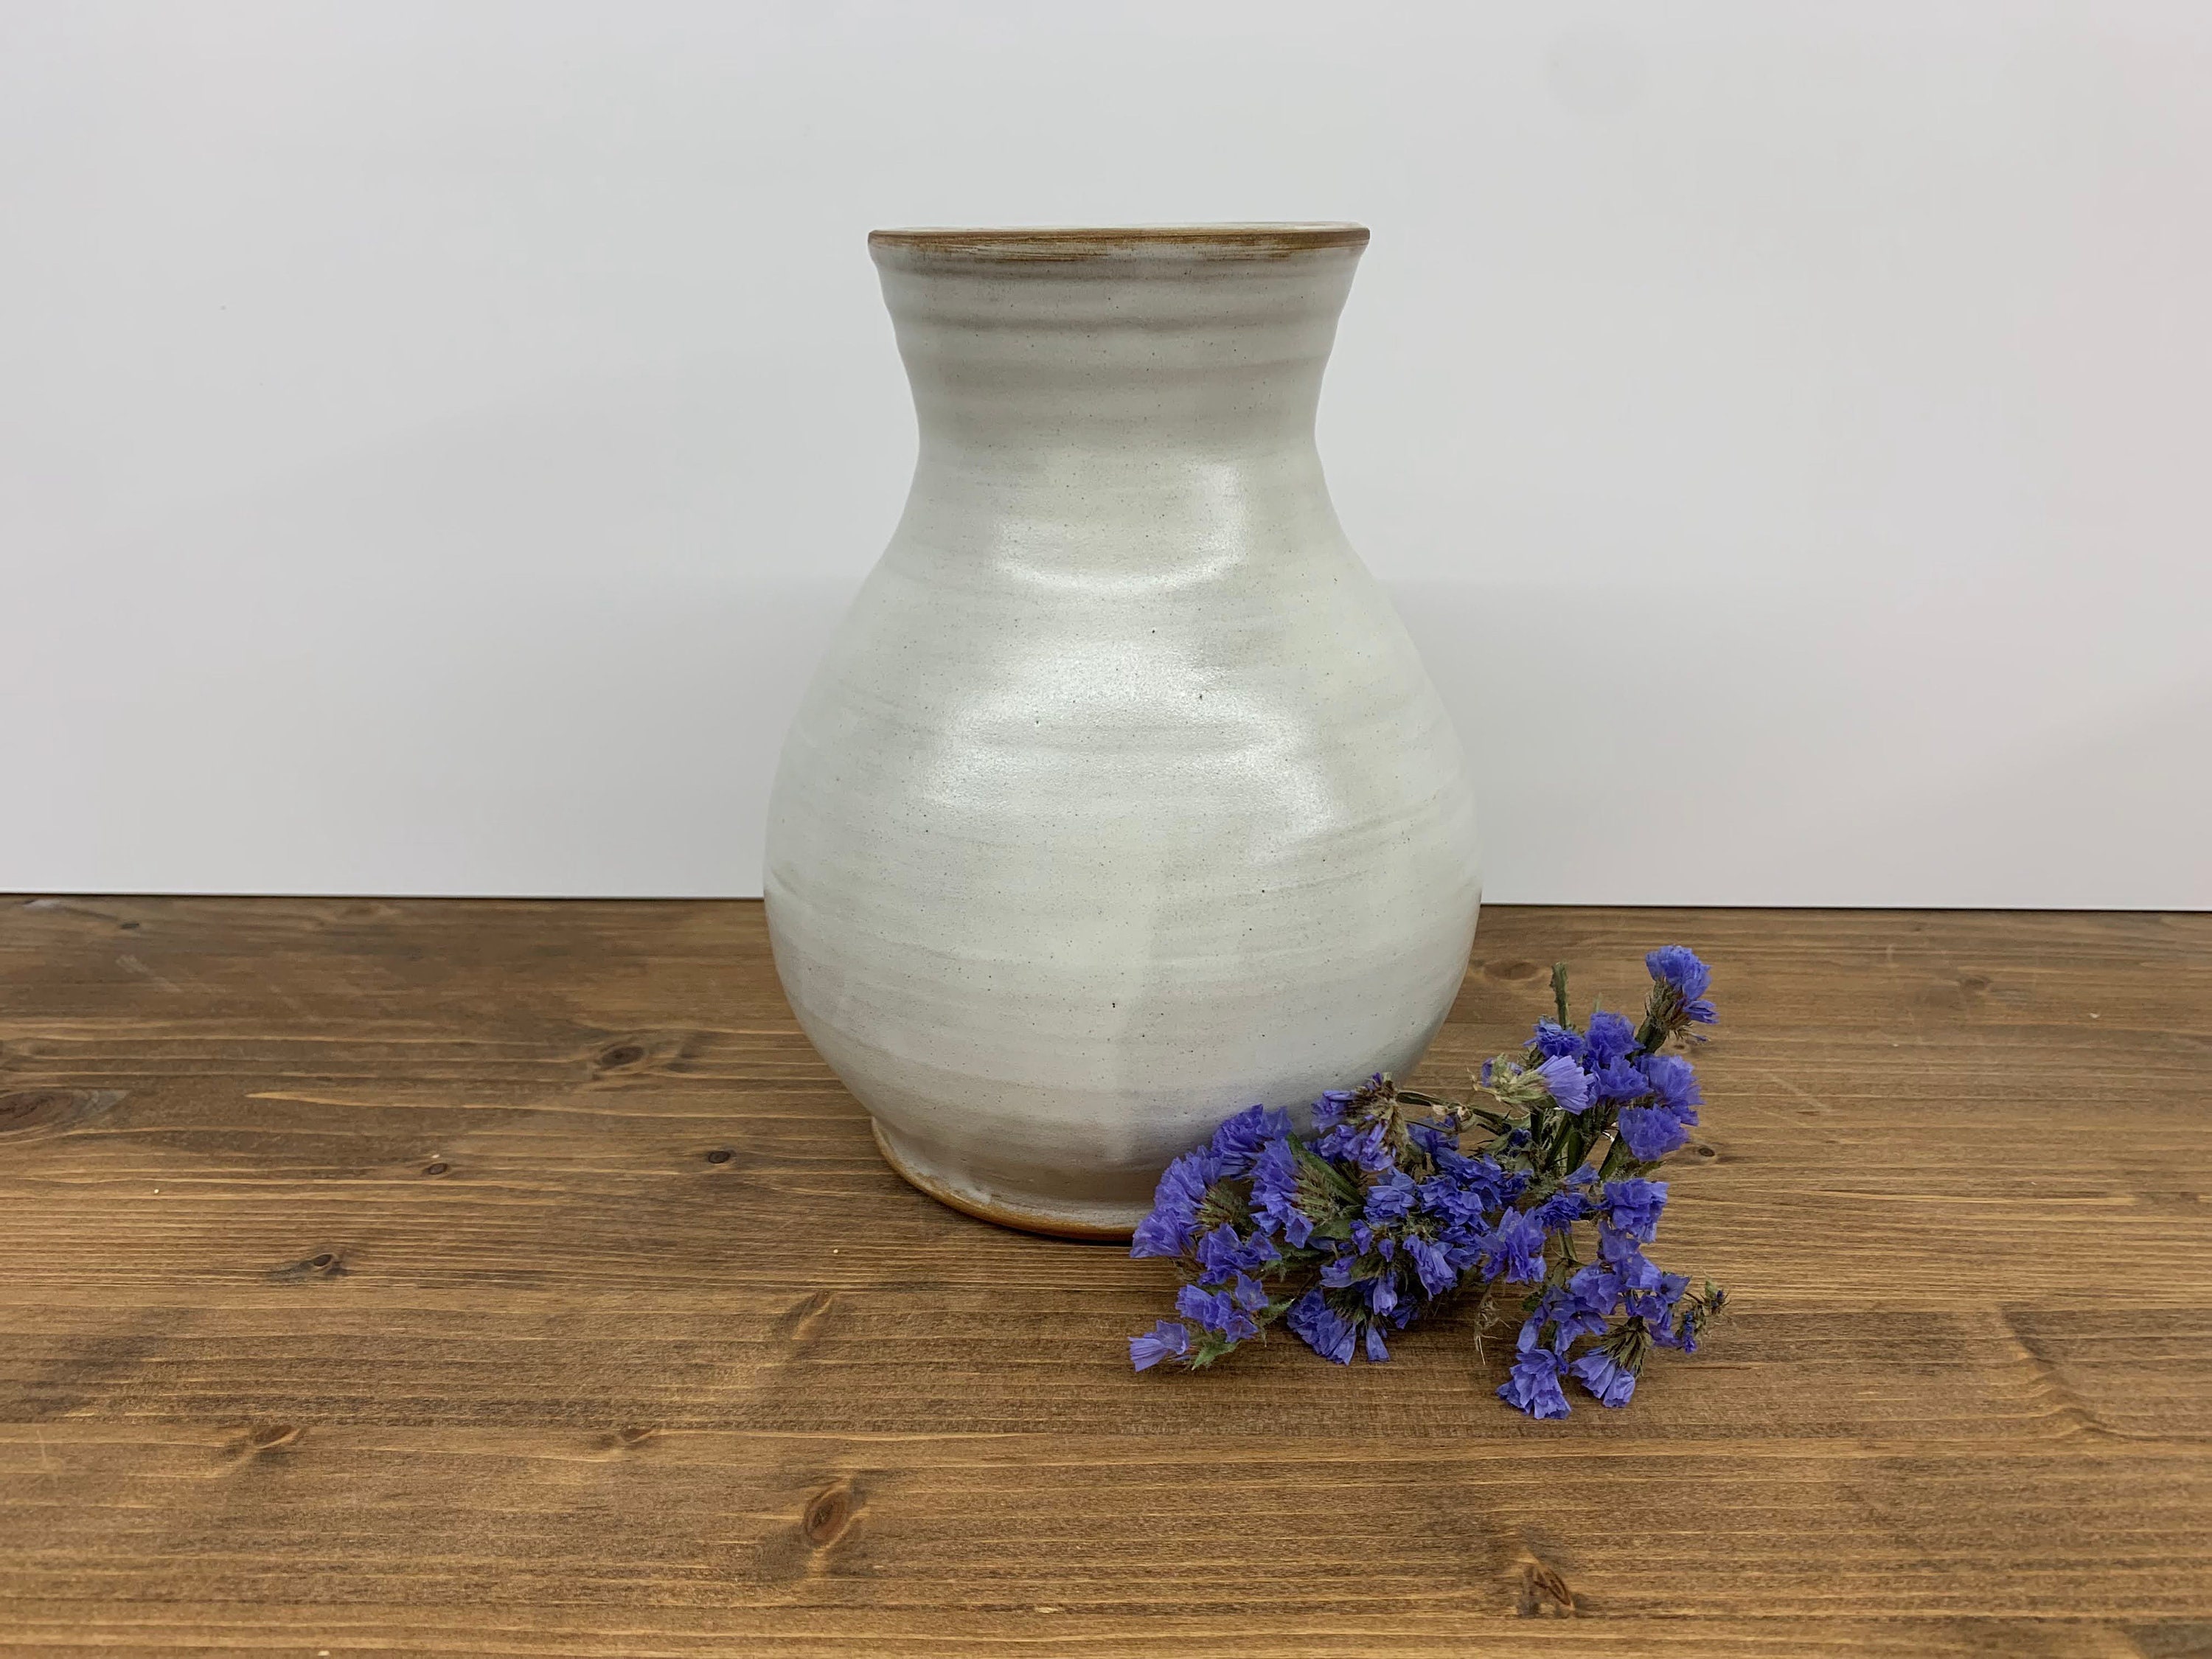 Handmade Ikebana Vases With Distinct Colors, Kenzan Flower Frog Included 